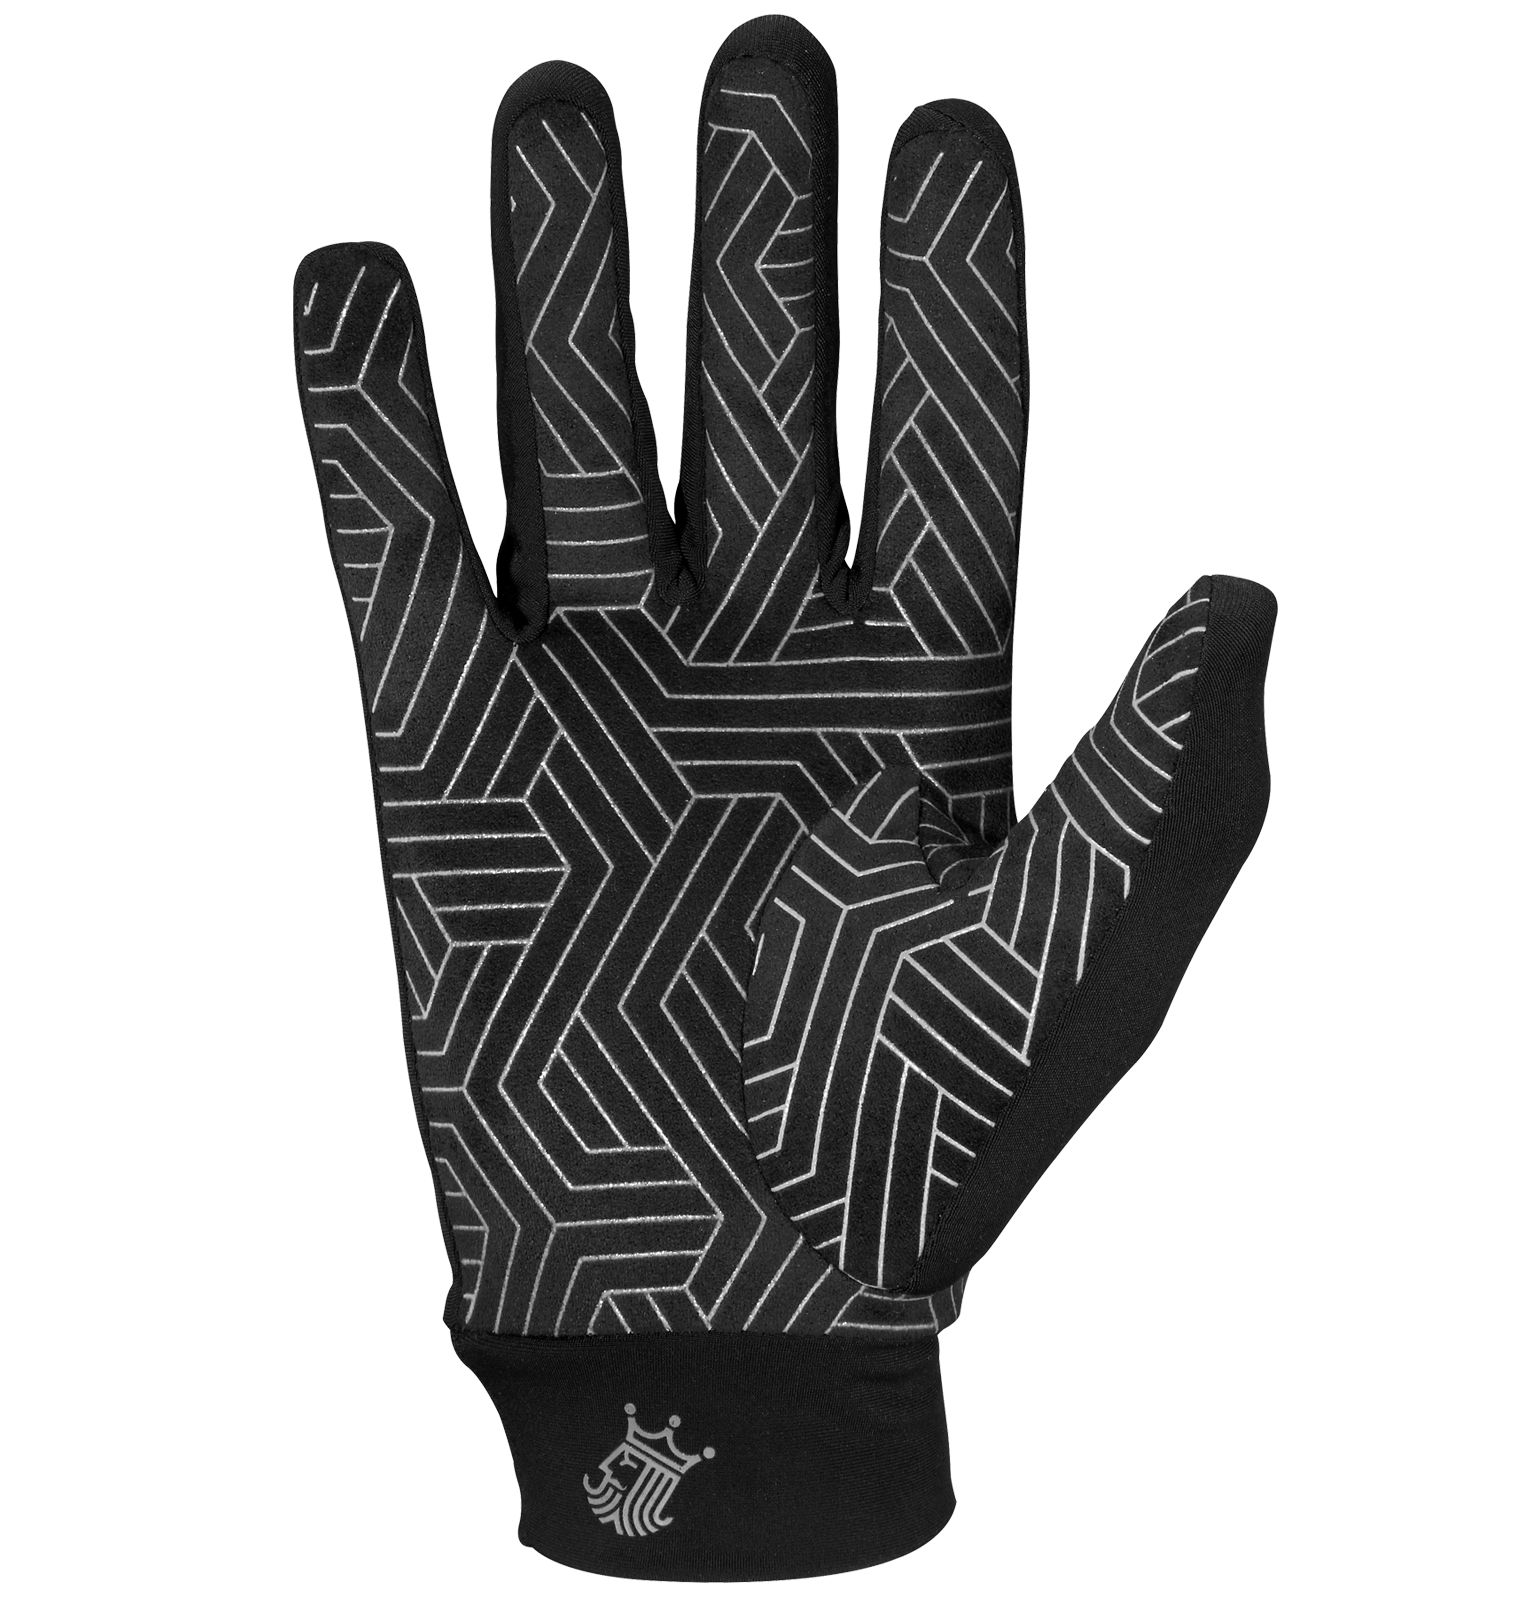 '18 Field Player Glove, Black image number 1